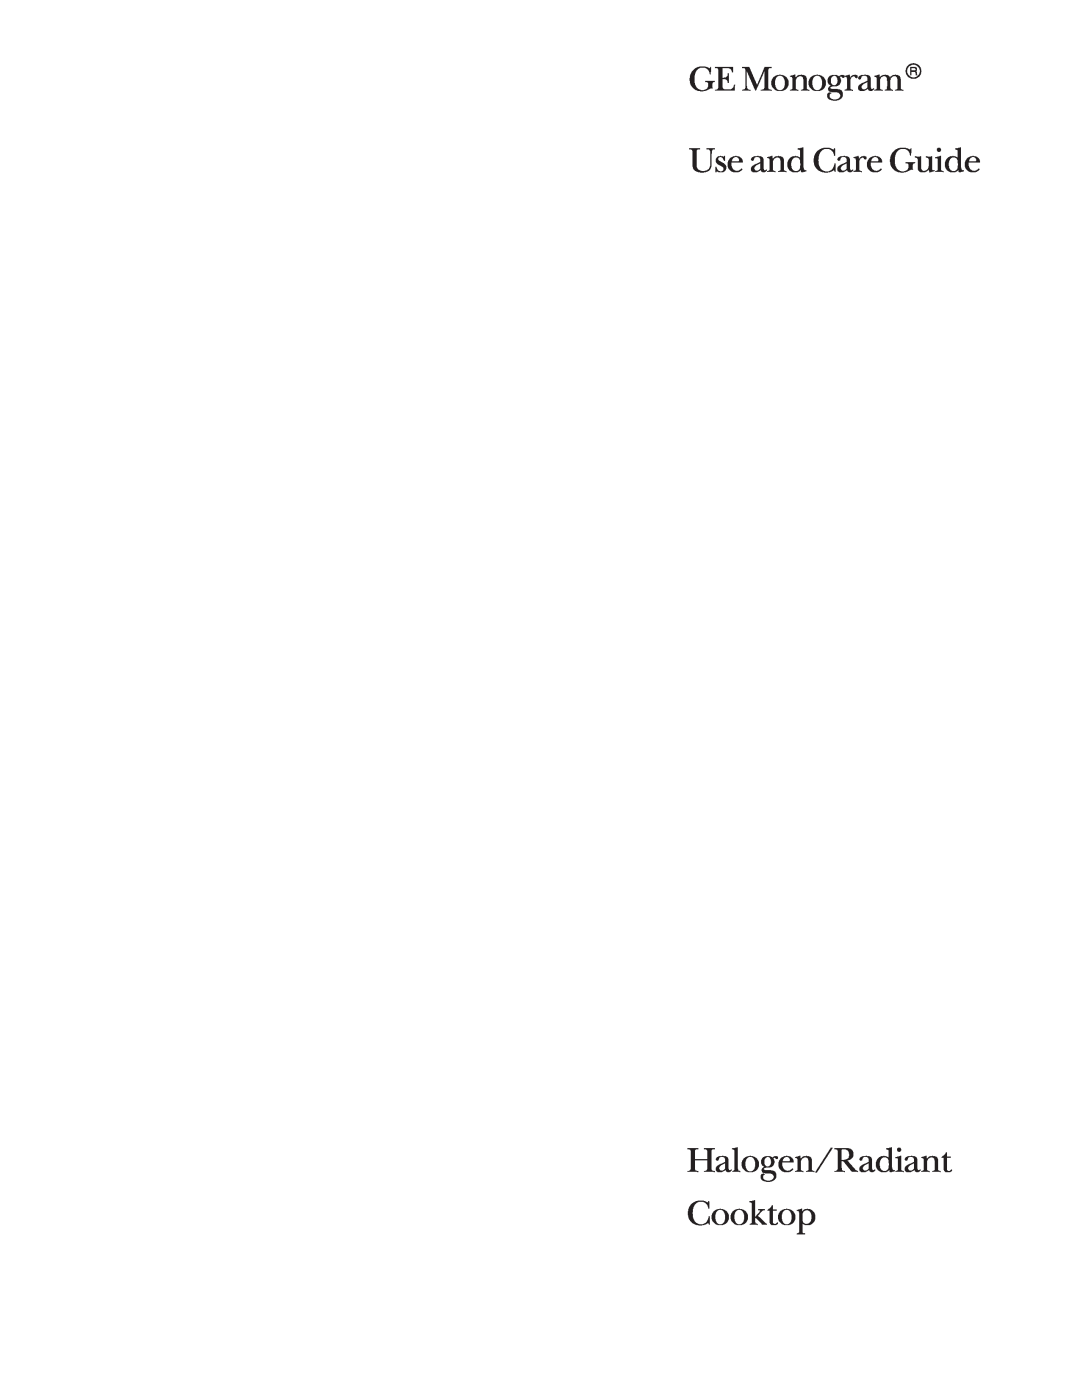 GE Monogram Halogen/Radiant Cooktop manual GE Monogram Use and Care Guide 